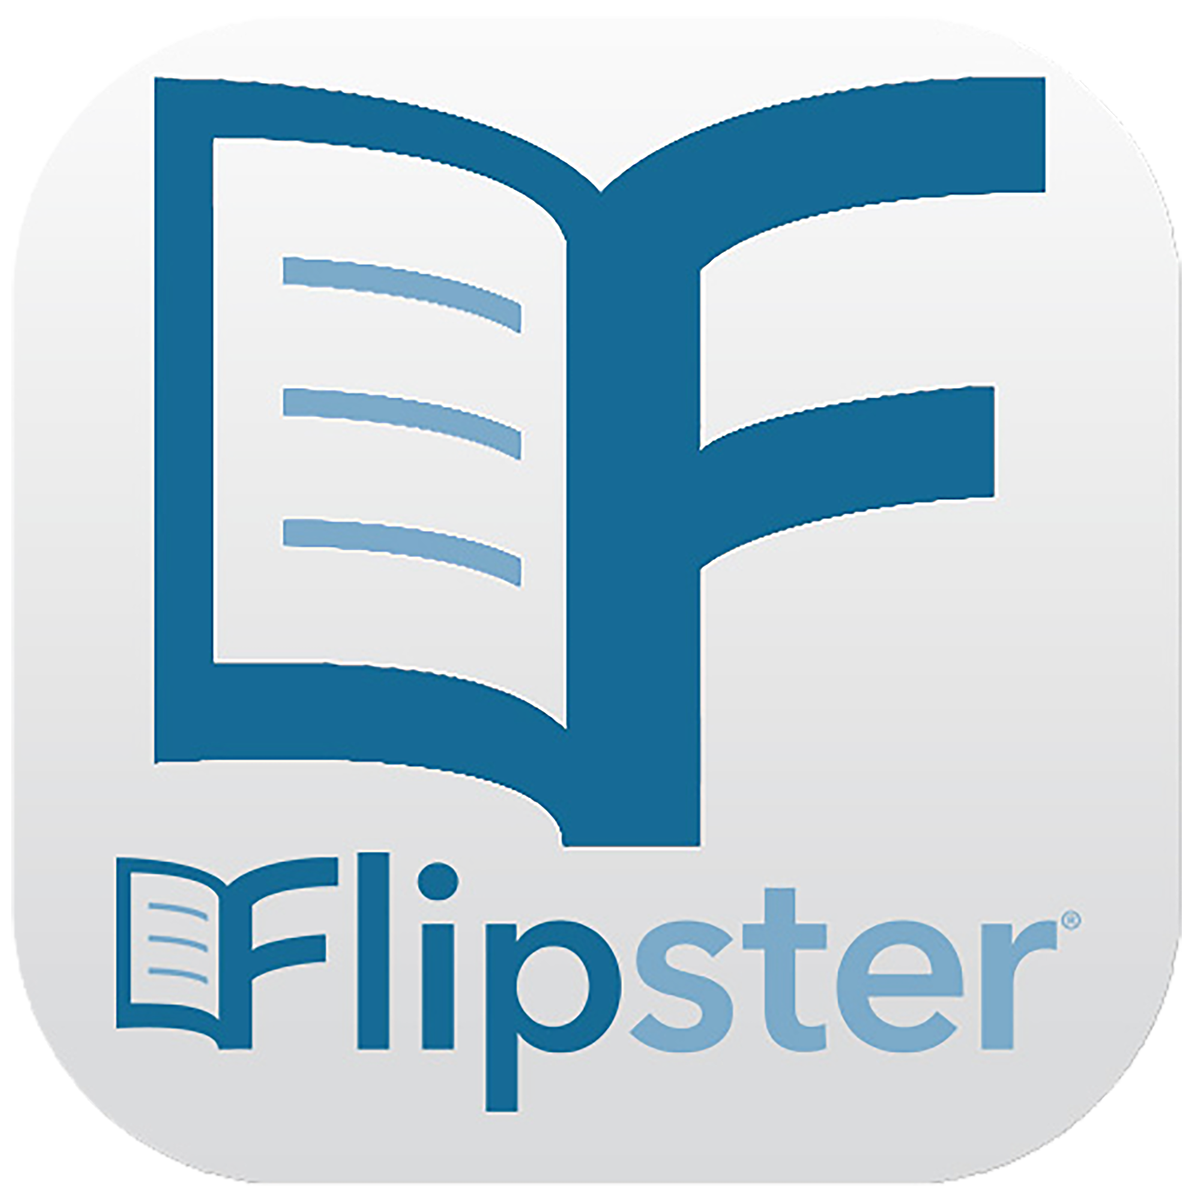 Fliptser graphic